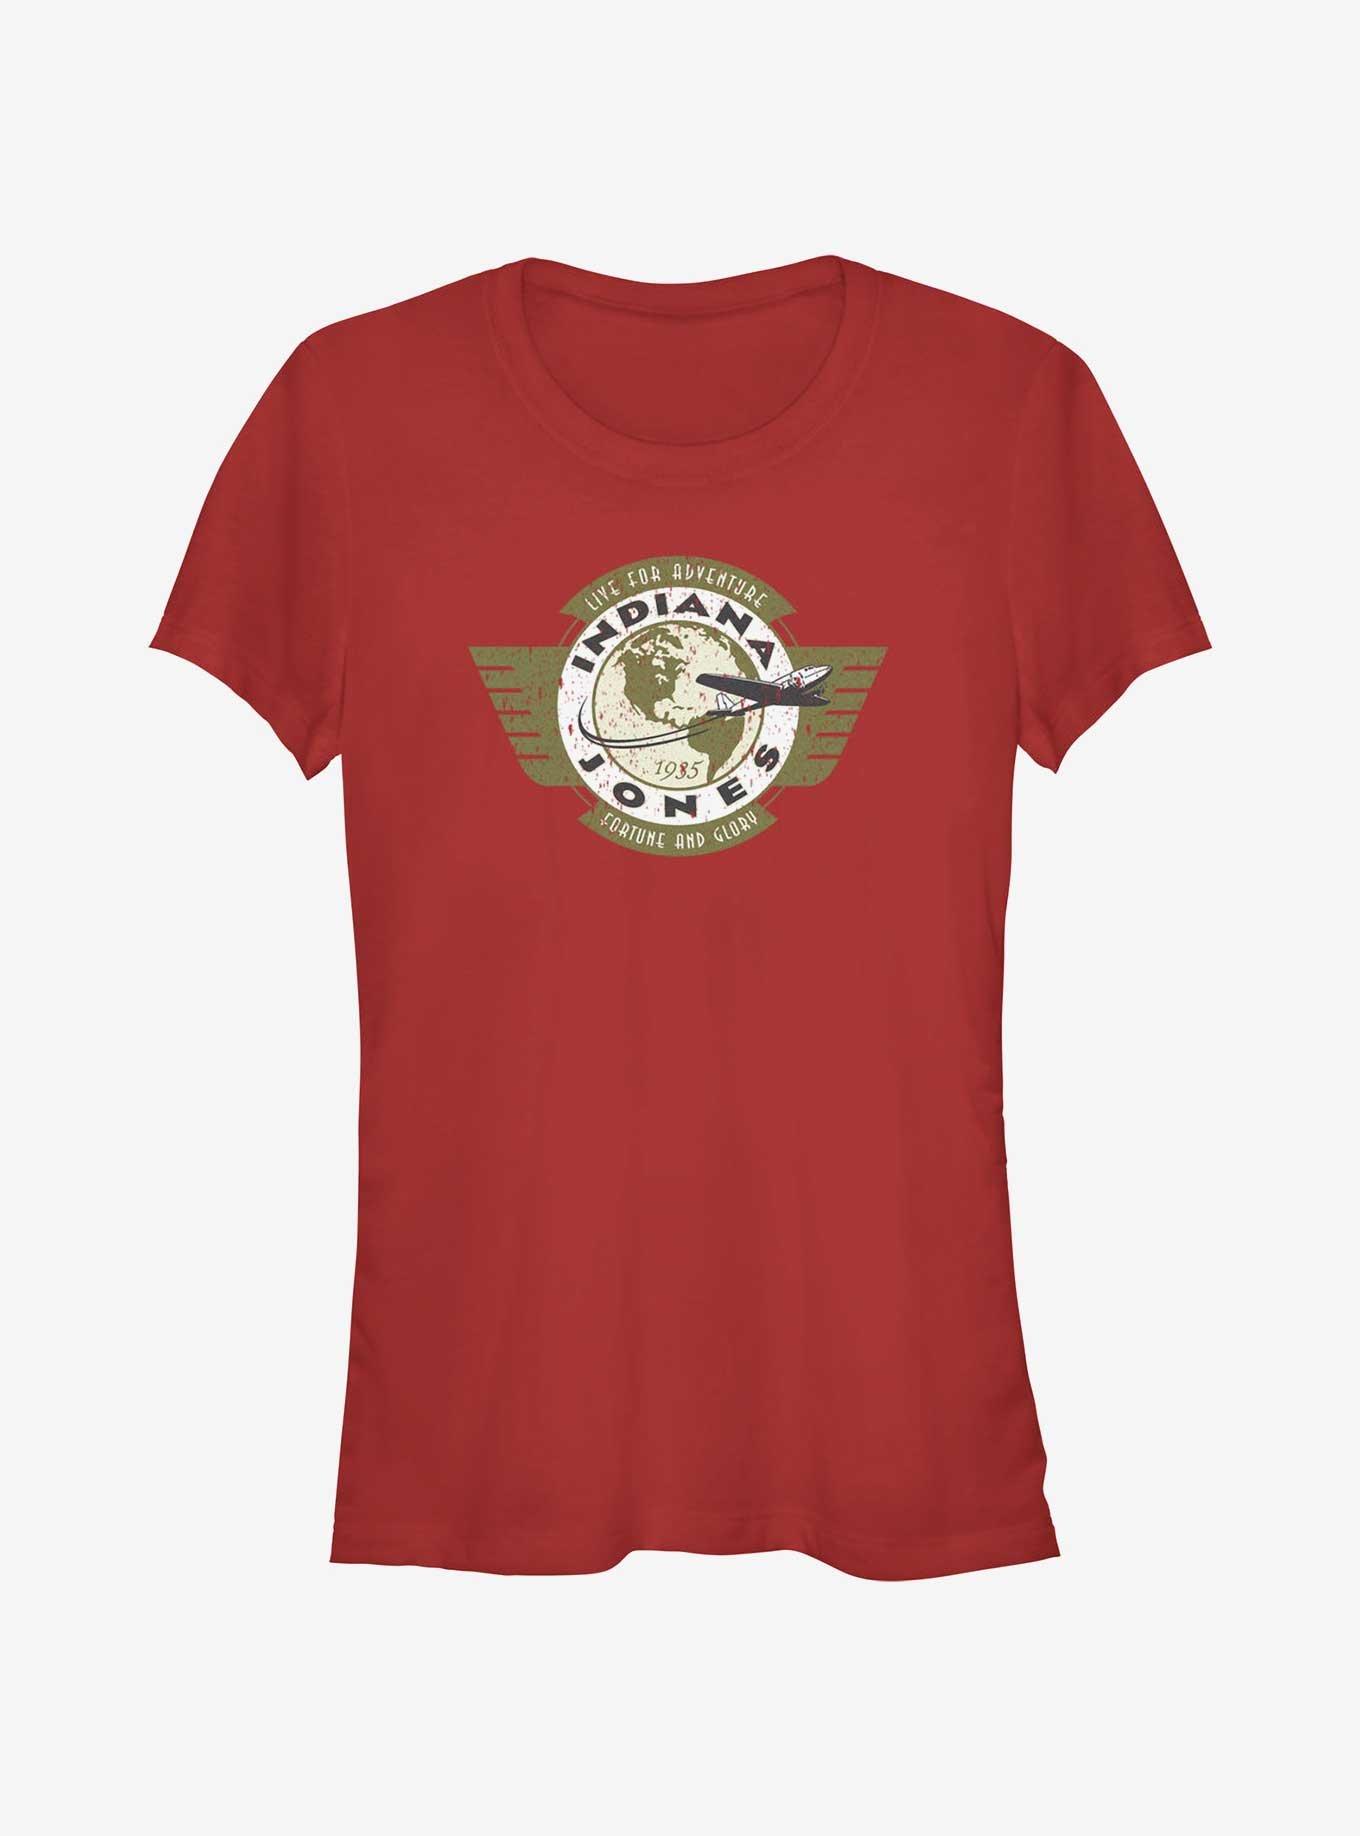 Indiana Jones Live For Adventure Vintage Aviation Badge Girls T-Shirt